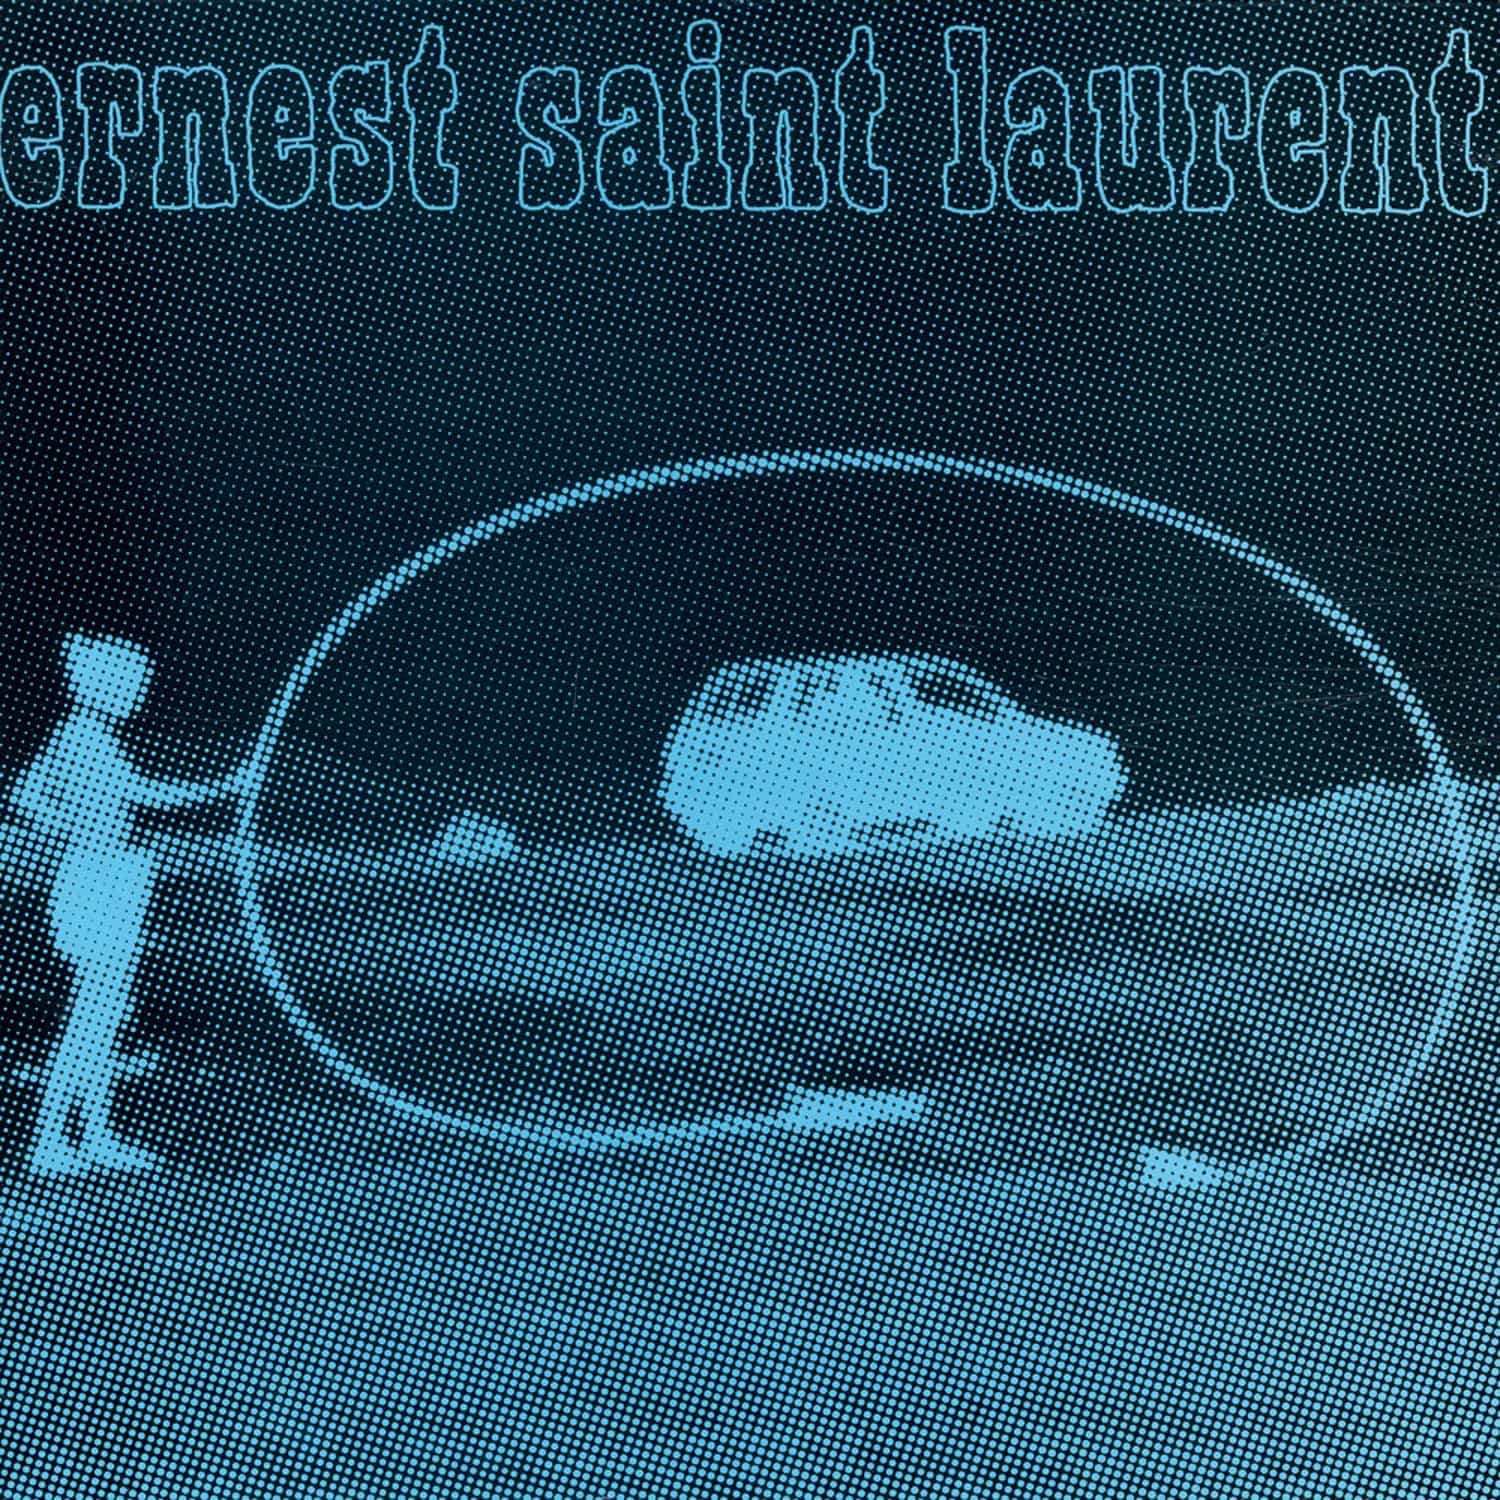 Ernest Saint Laurent - A GOOD TRIP WITH MY GRANDMOTHER